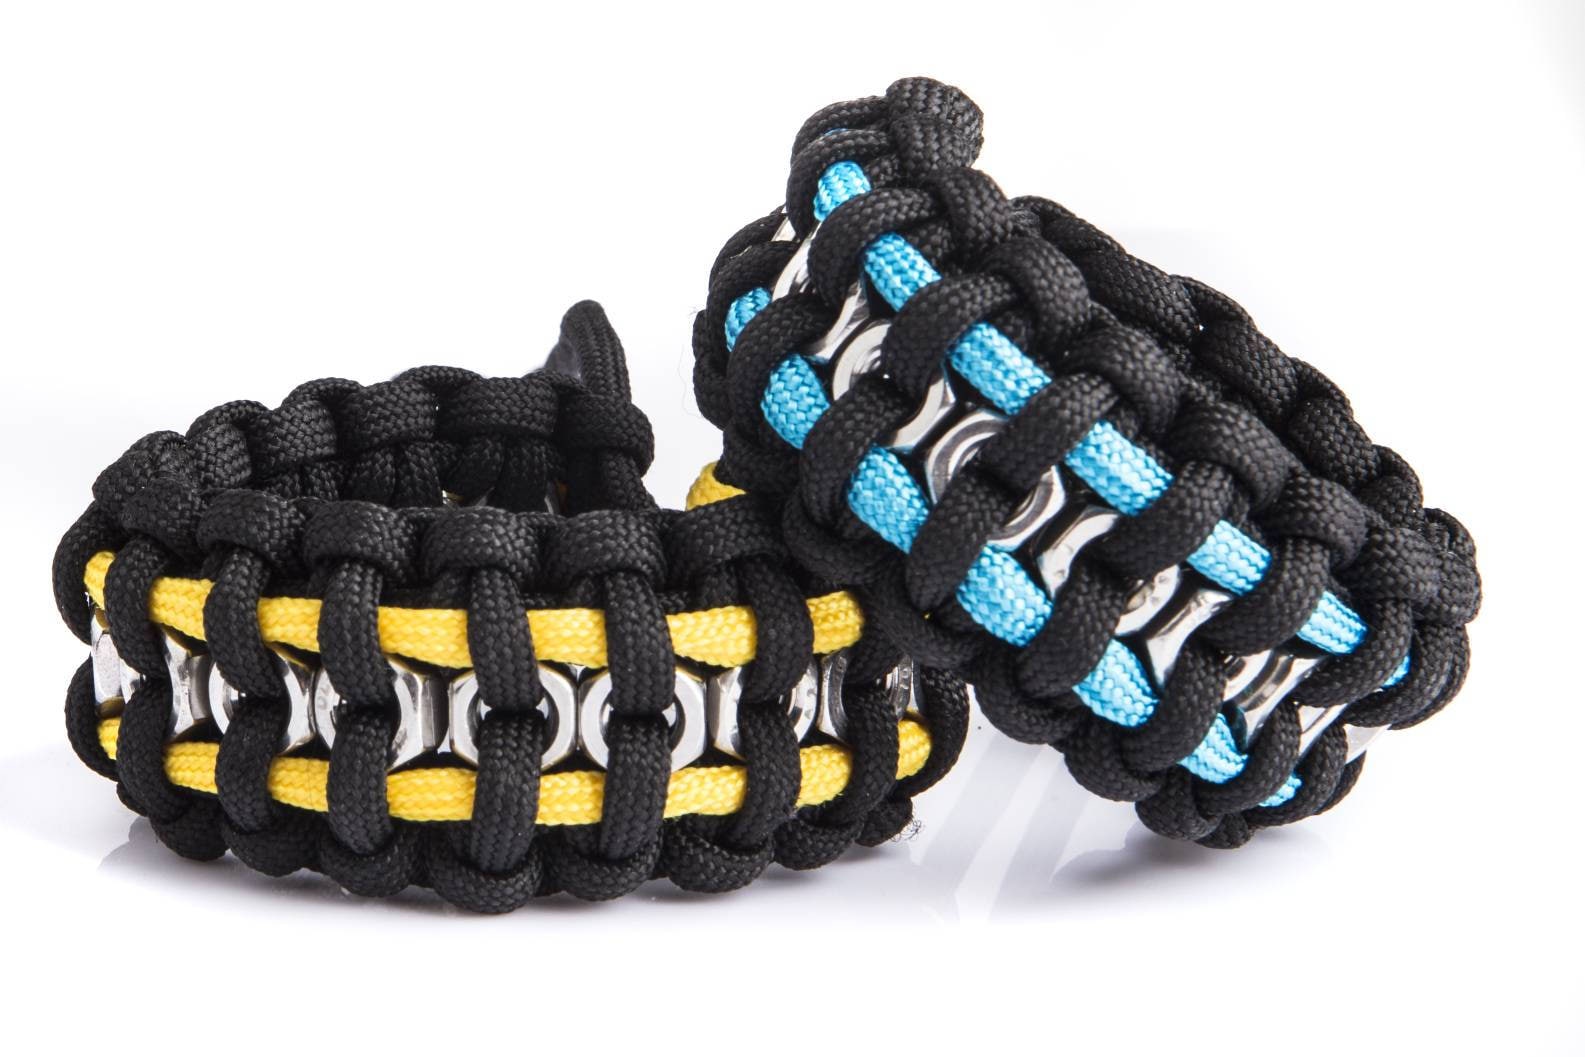 Wholesale Cheap Paracord Survival Bracelet Clasps - Buy in Bulk on DHgate UK